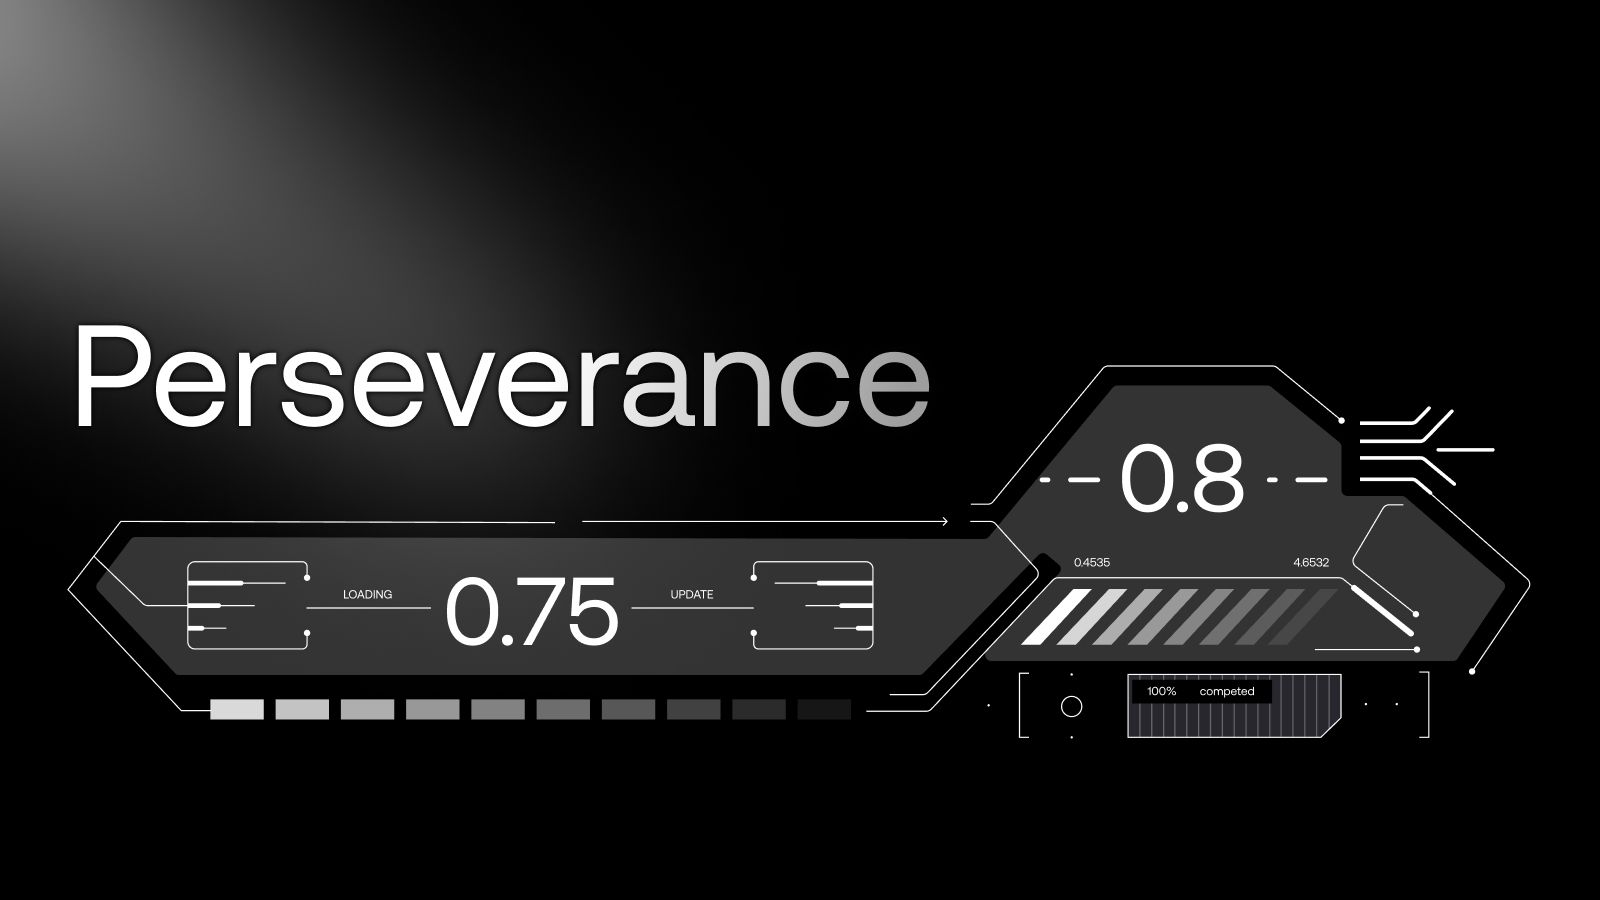 Chainflip's Testnet Perseverance 0.8 Release